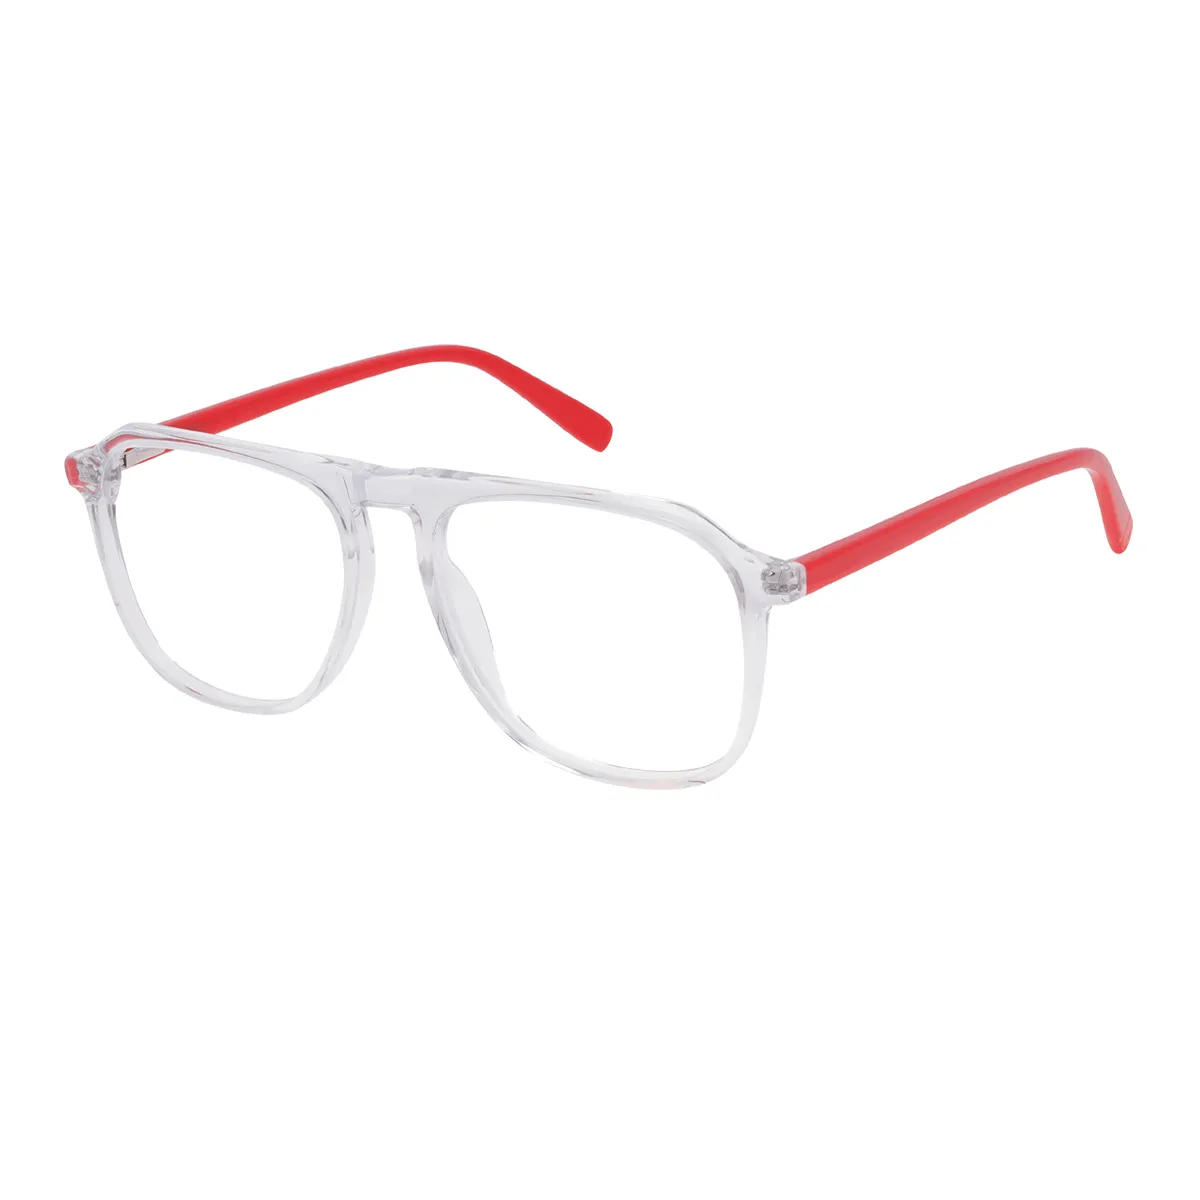 Iverson - Aviator Translucent-Red Glasses for Men & Women - EFE